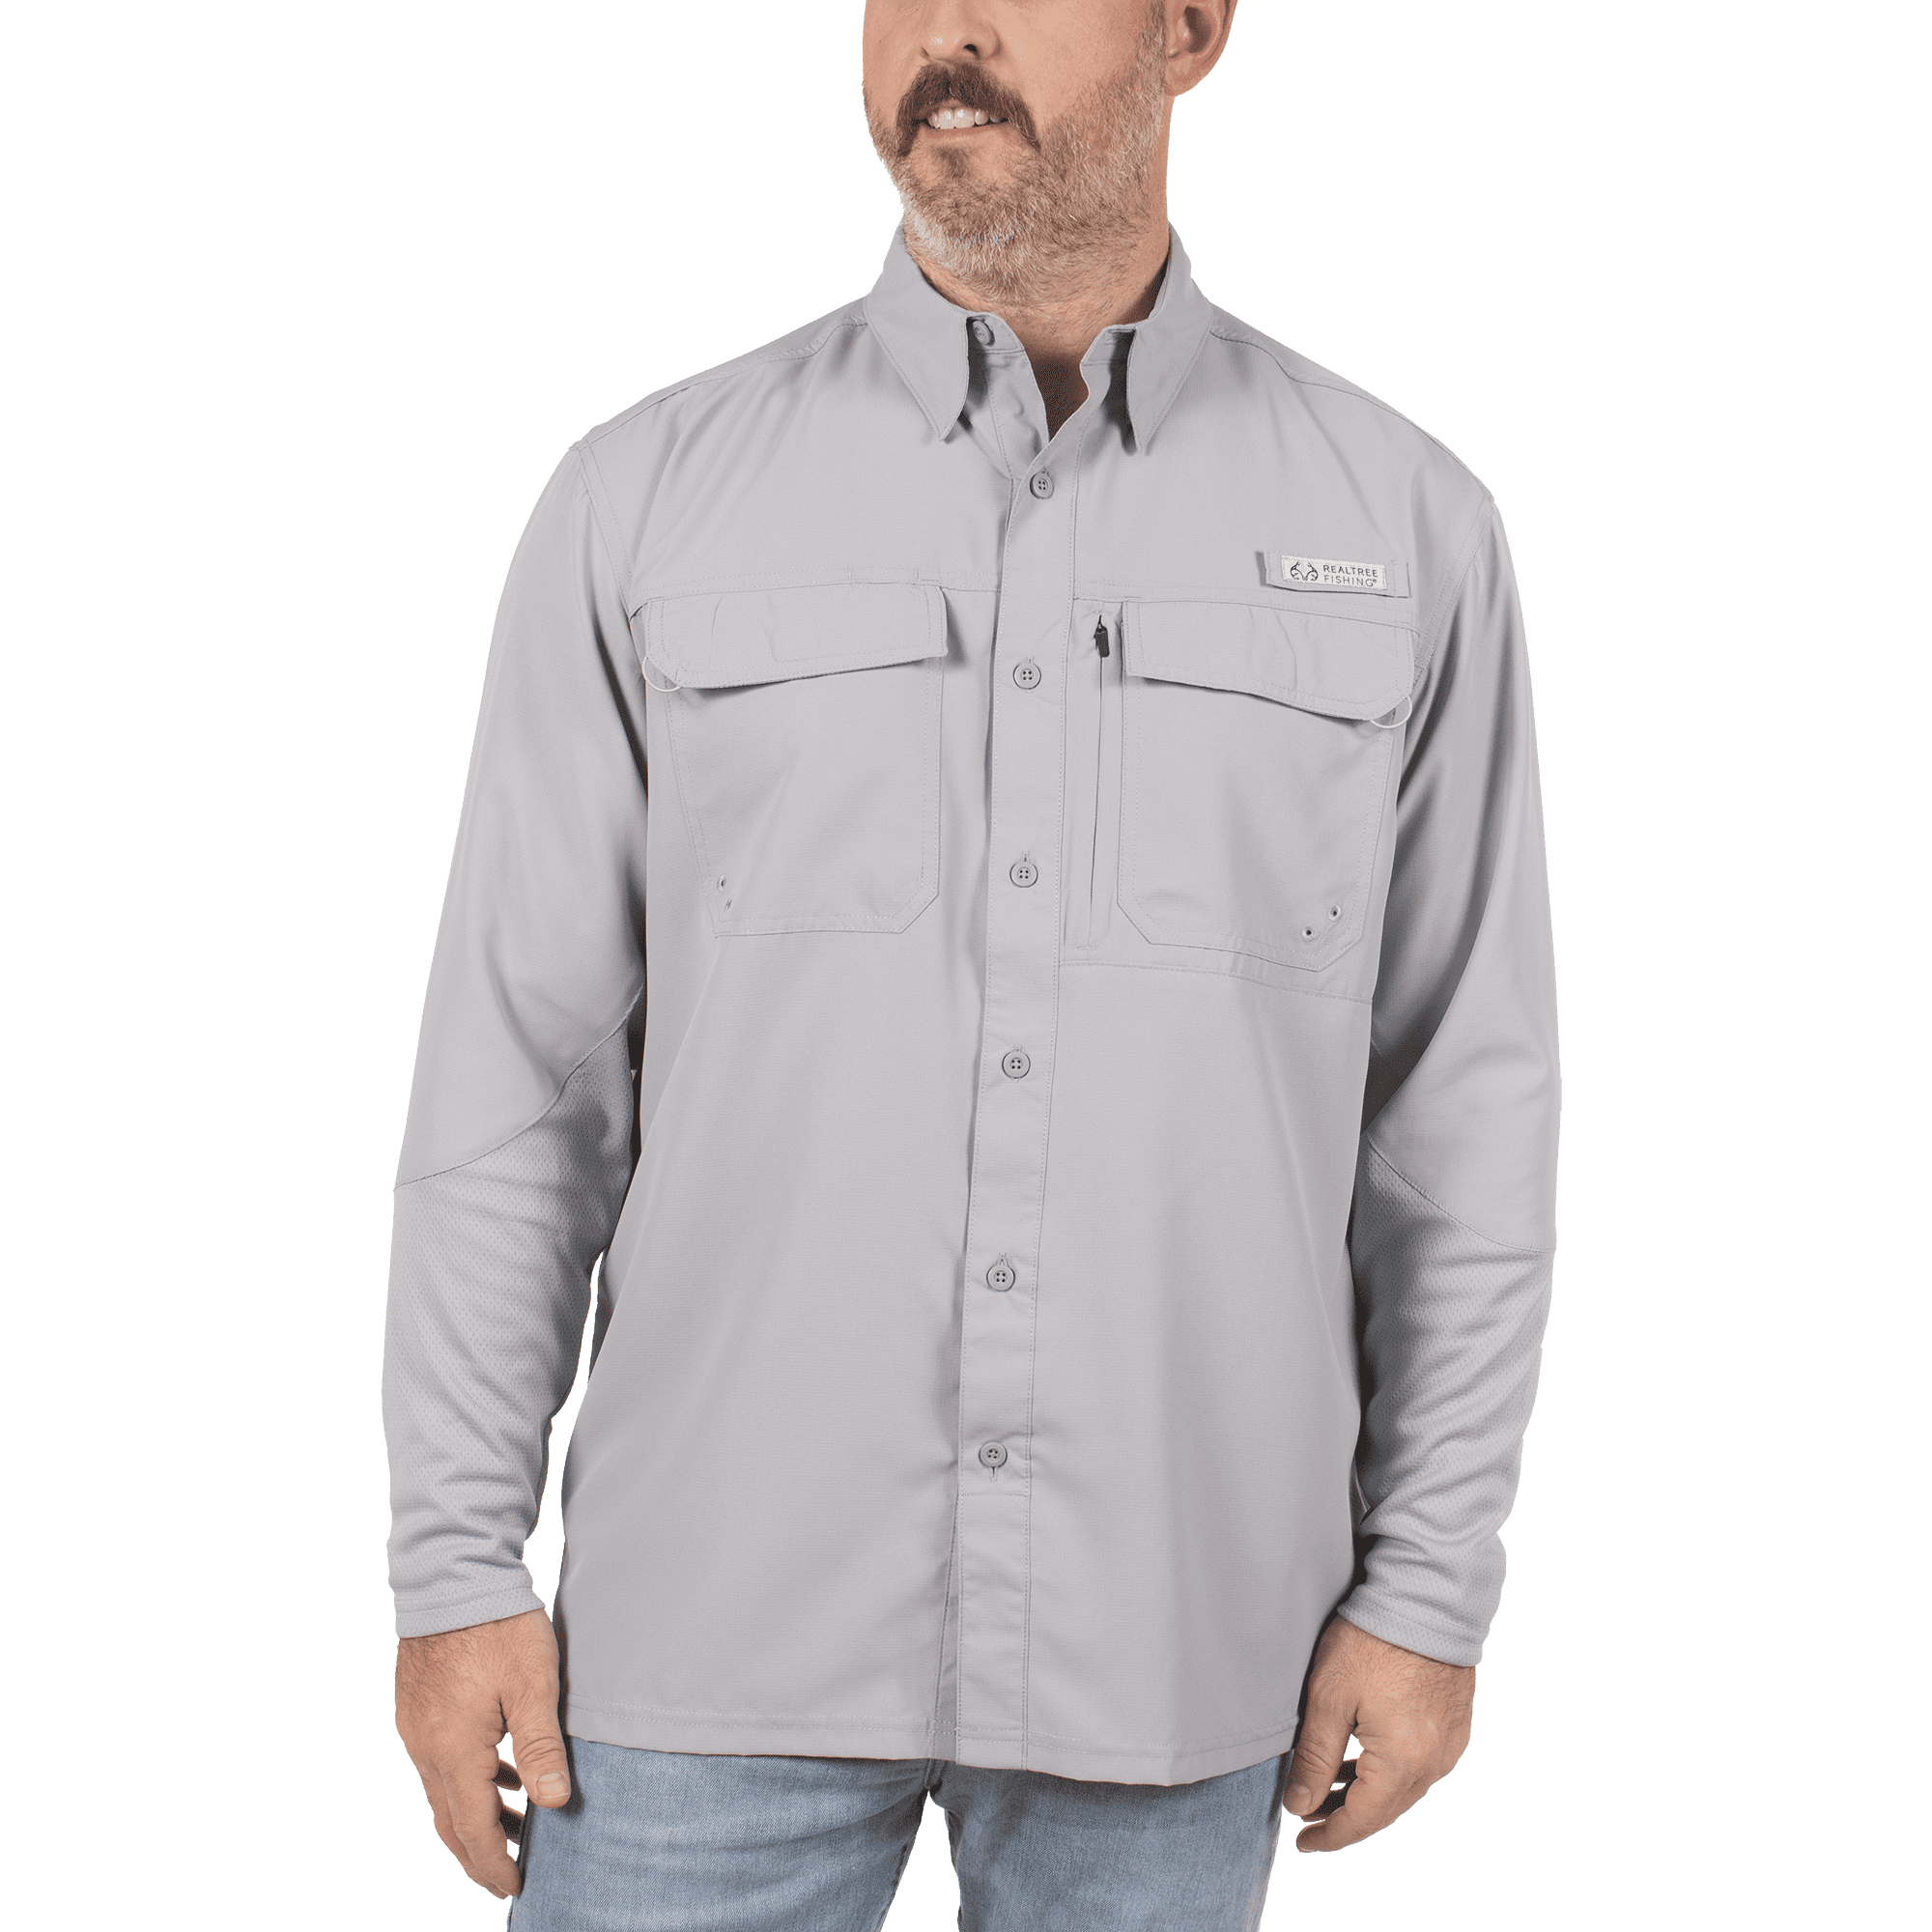 Realtree Sleet Gray Mens Long Sleeve Fishing Guide Shirt- L 